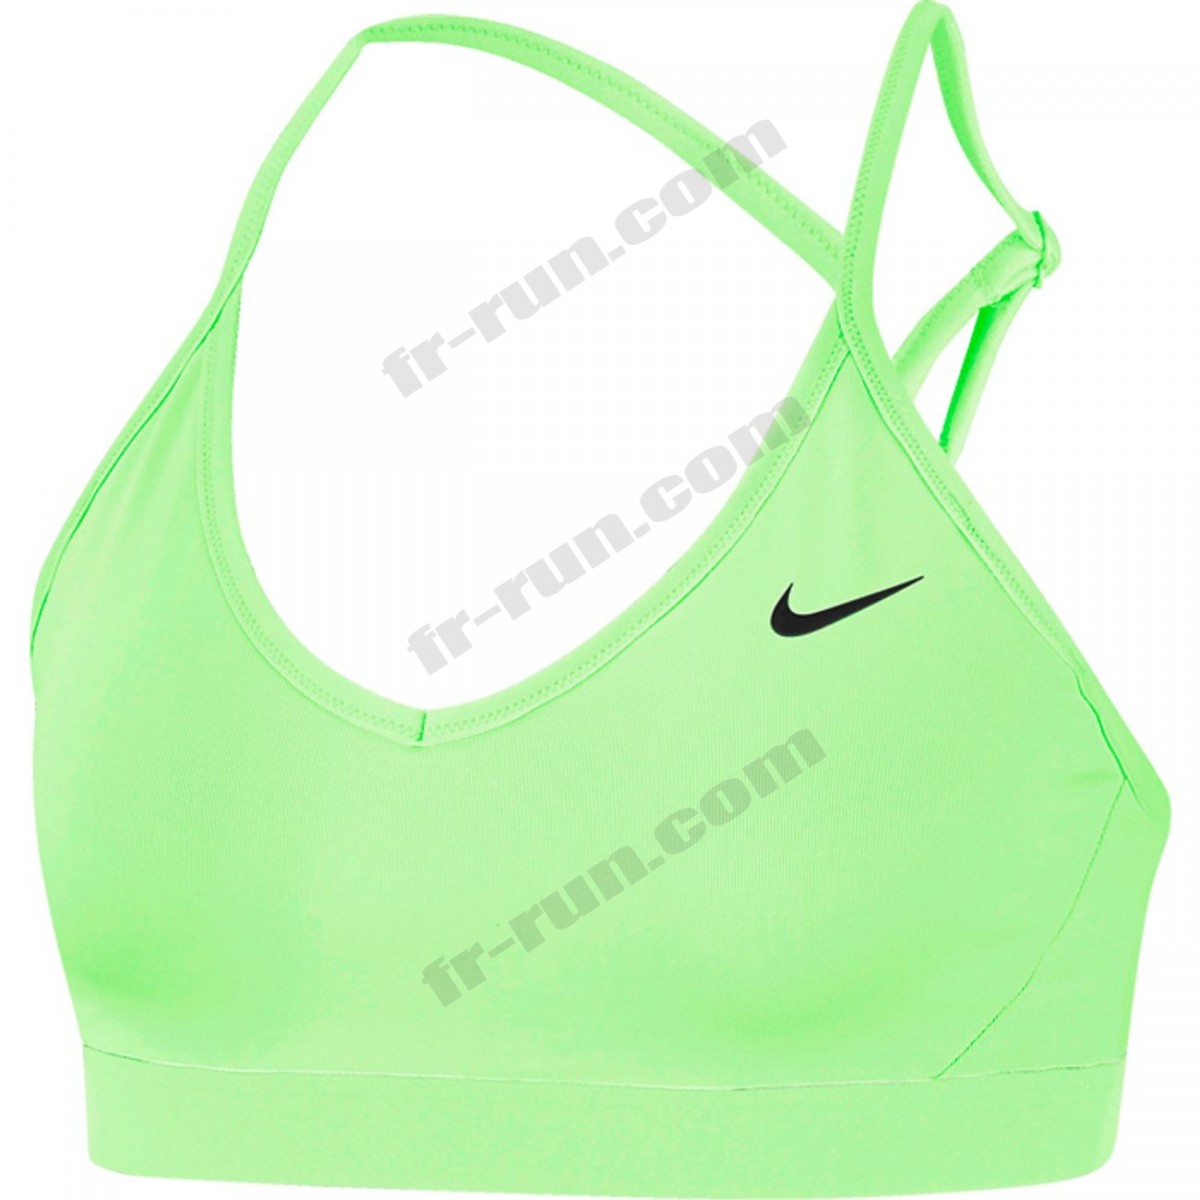 Nike/BRASSIERE Multisport femme NIKE NIKE INDY √ Nouveau style √ Soldes - -0